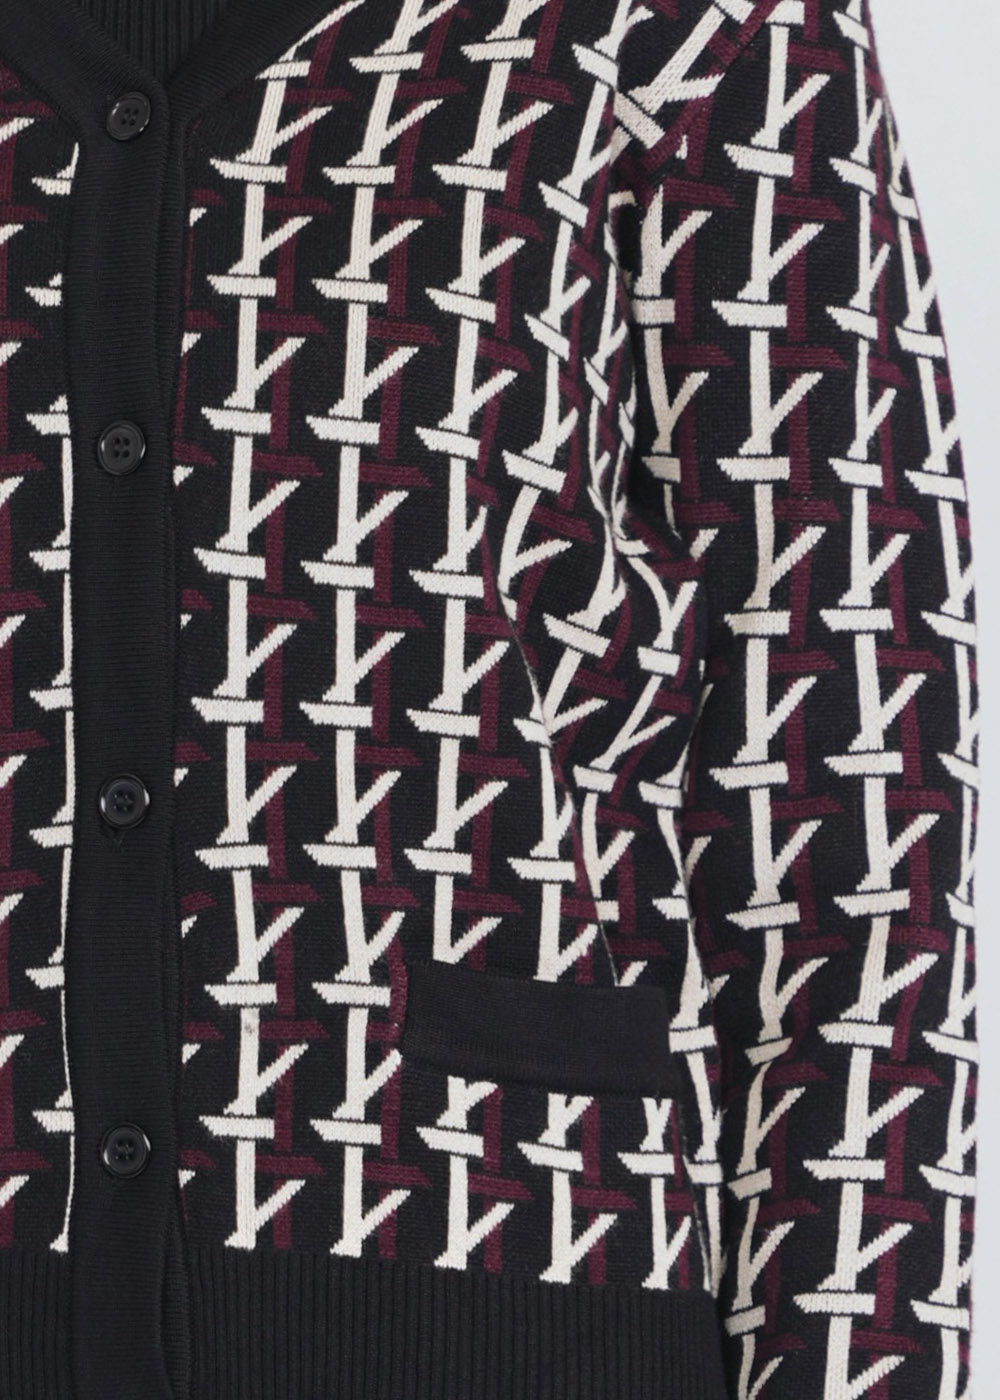 Alluring Printed Knit Cardigan